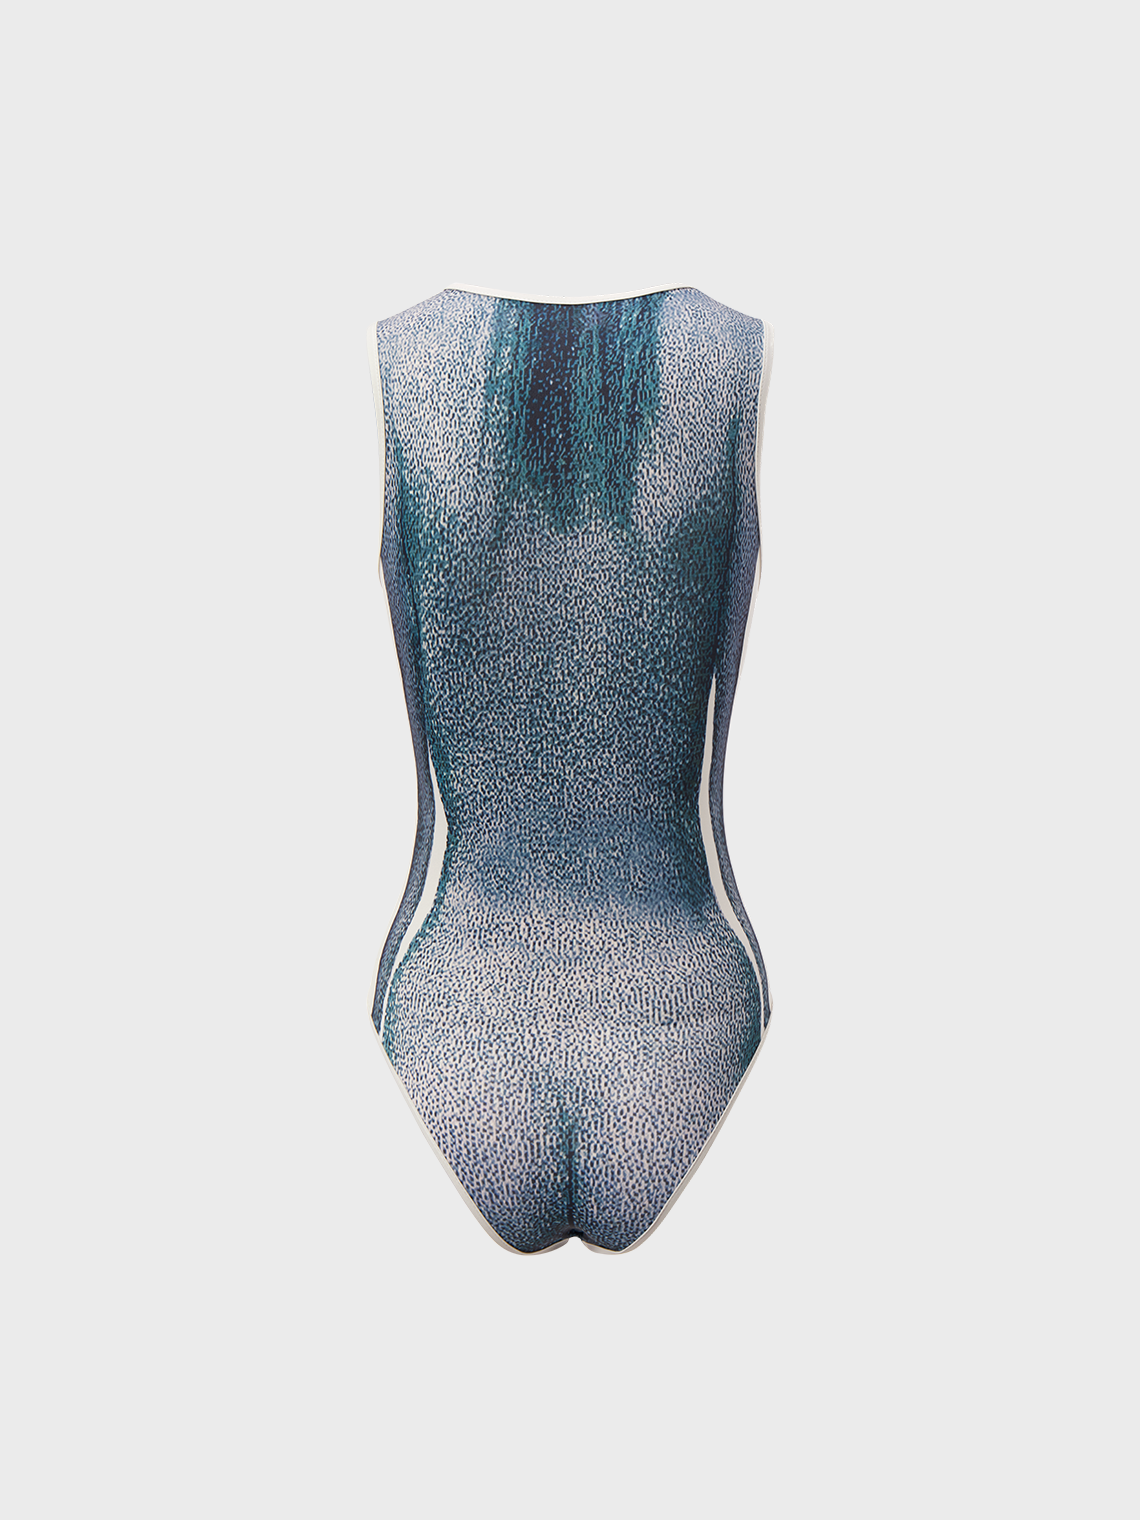 【Final Sale】Edgy Art Gray Body Bodysuit